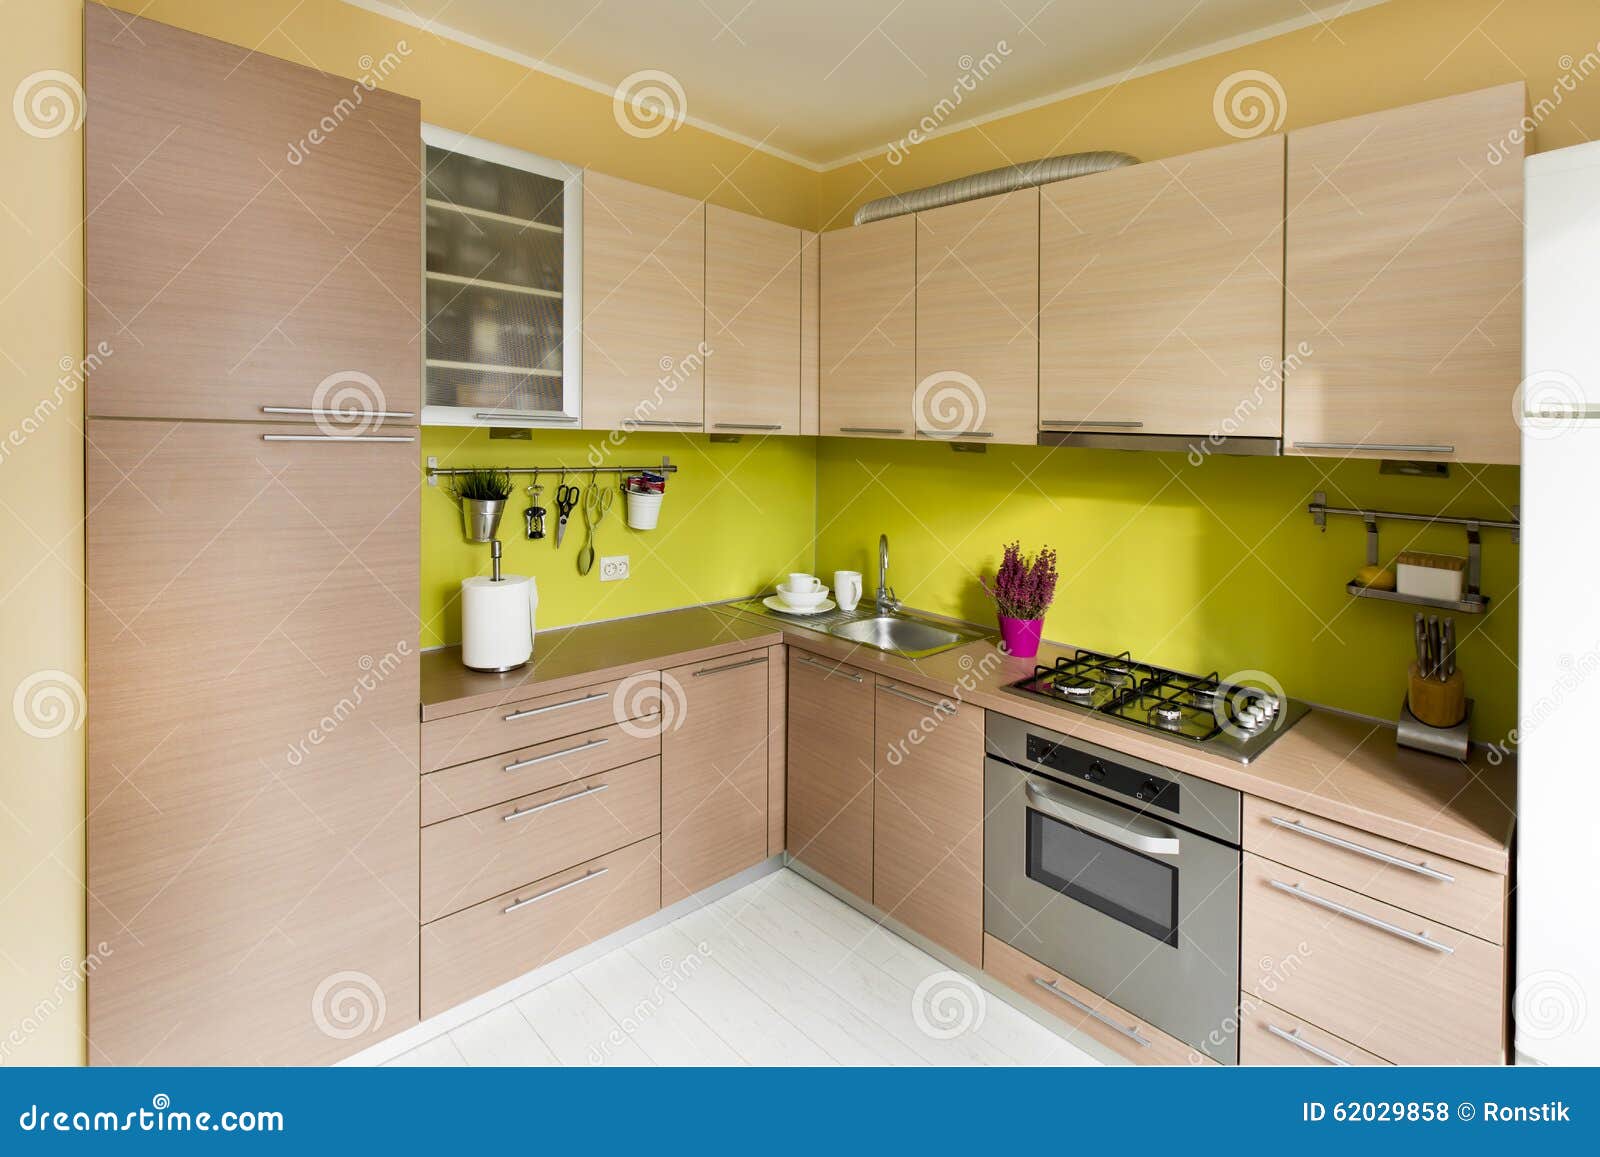 n time kitchen design